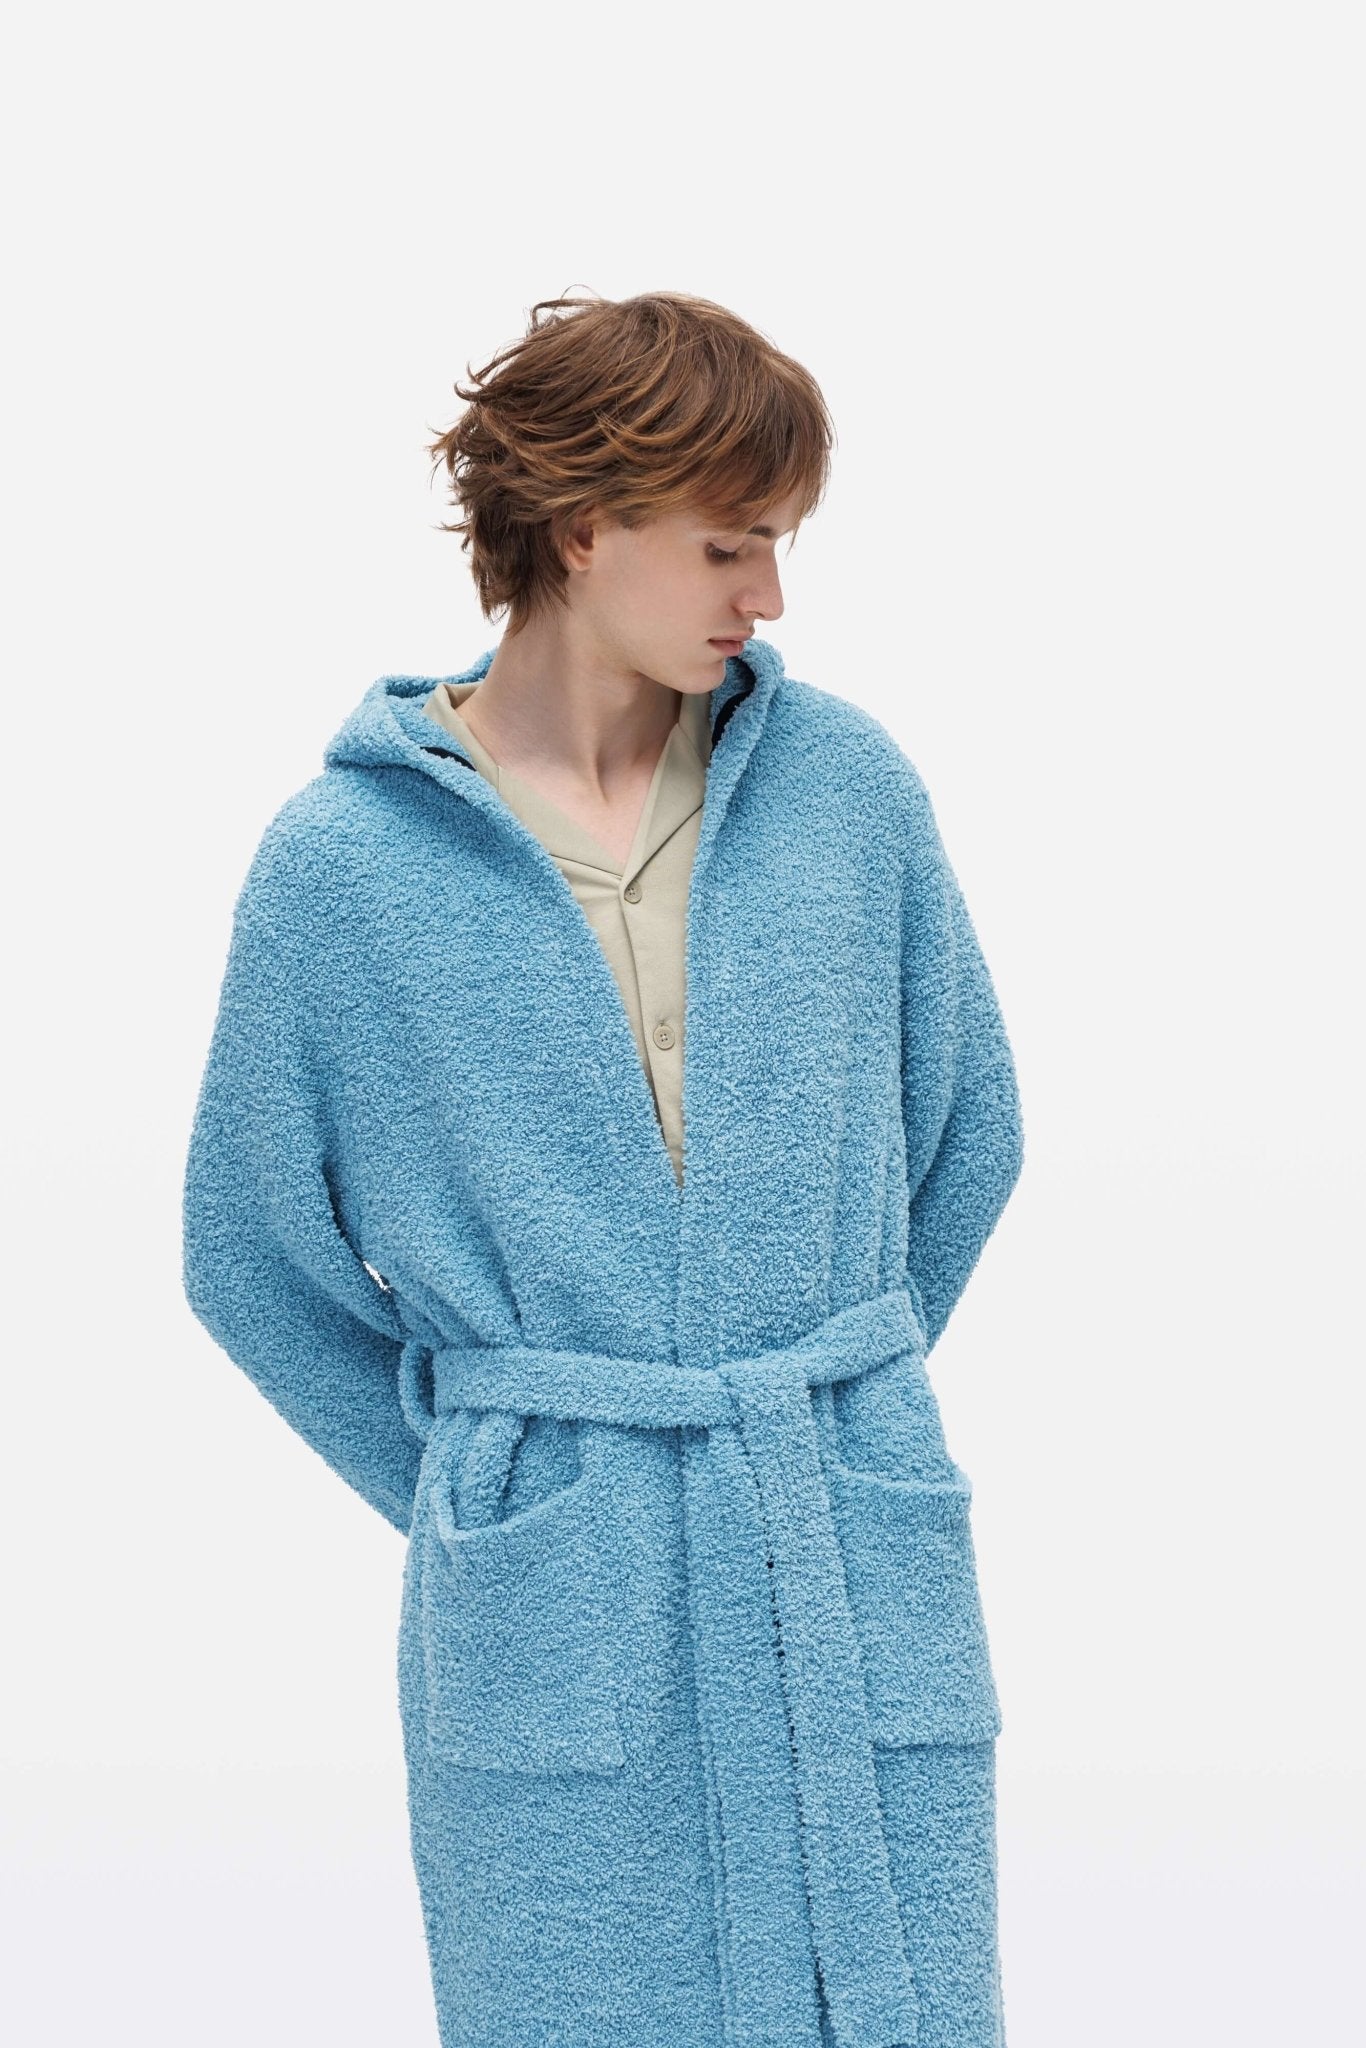 Aqua Blue Hooded Plush Bathrobe - Robe - Touchofgod.co